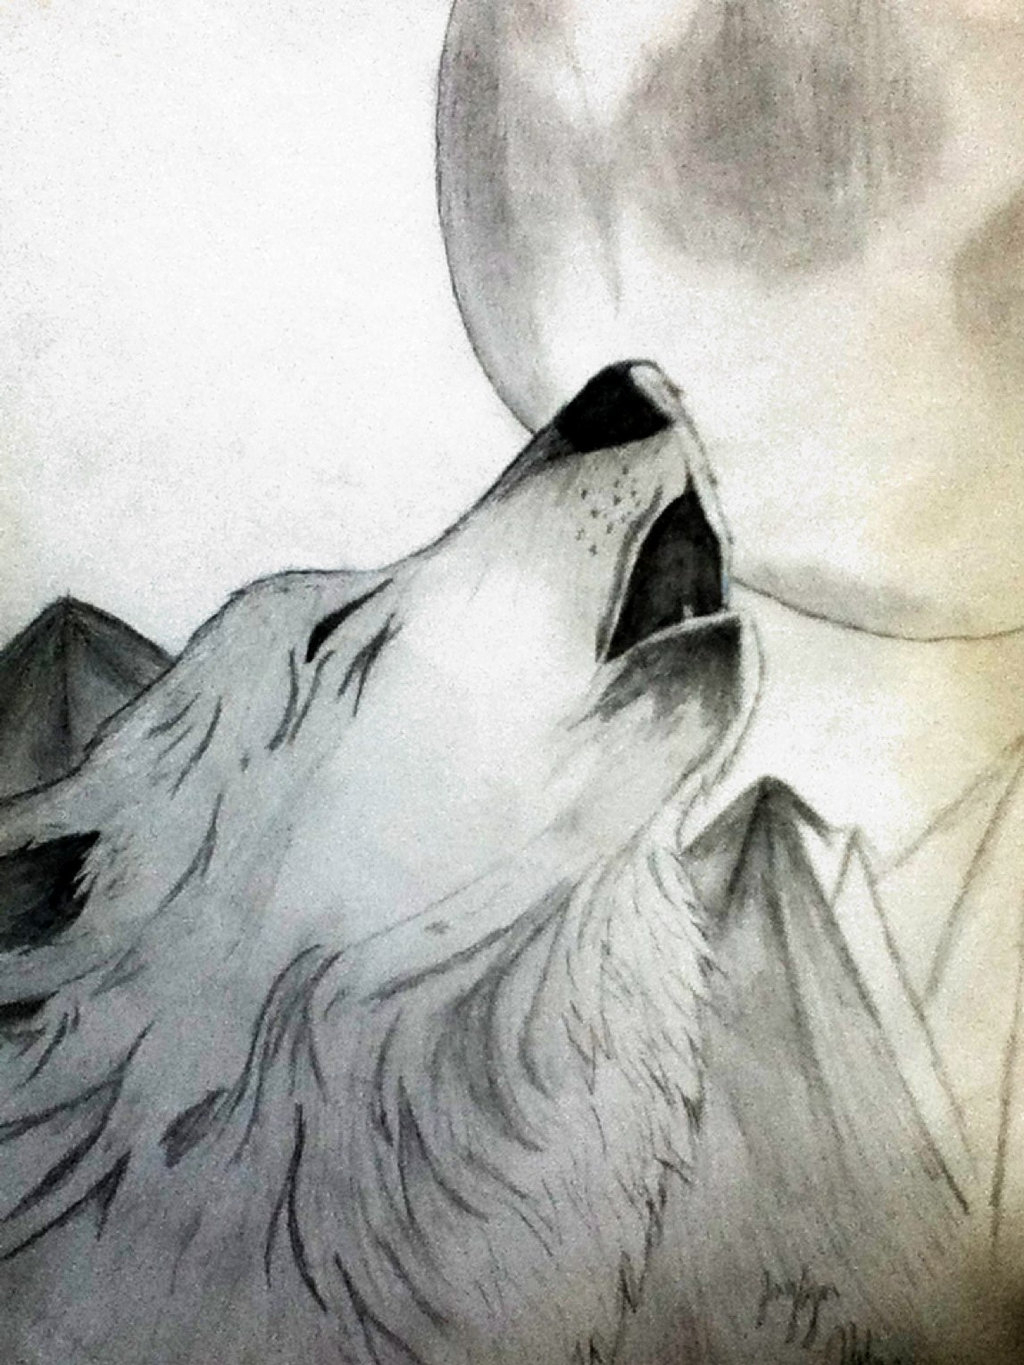 Wolf Howling At Moon Drawing at GetDrawings Free download